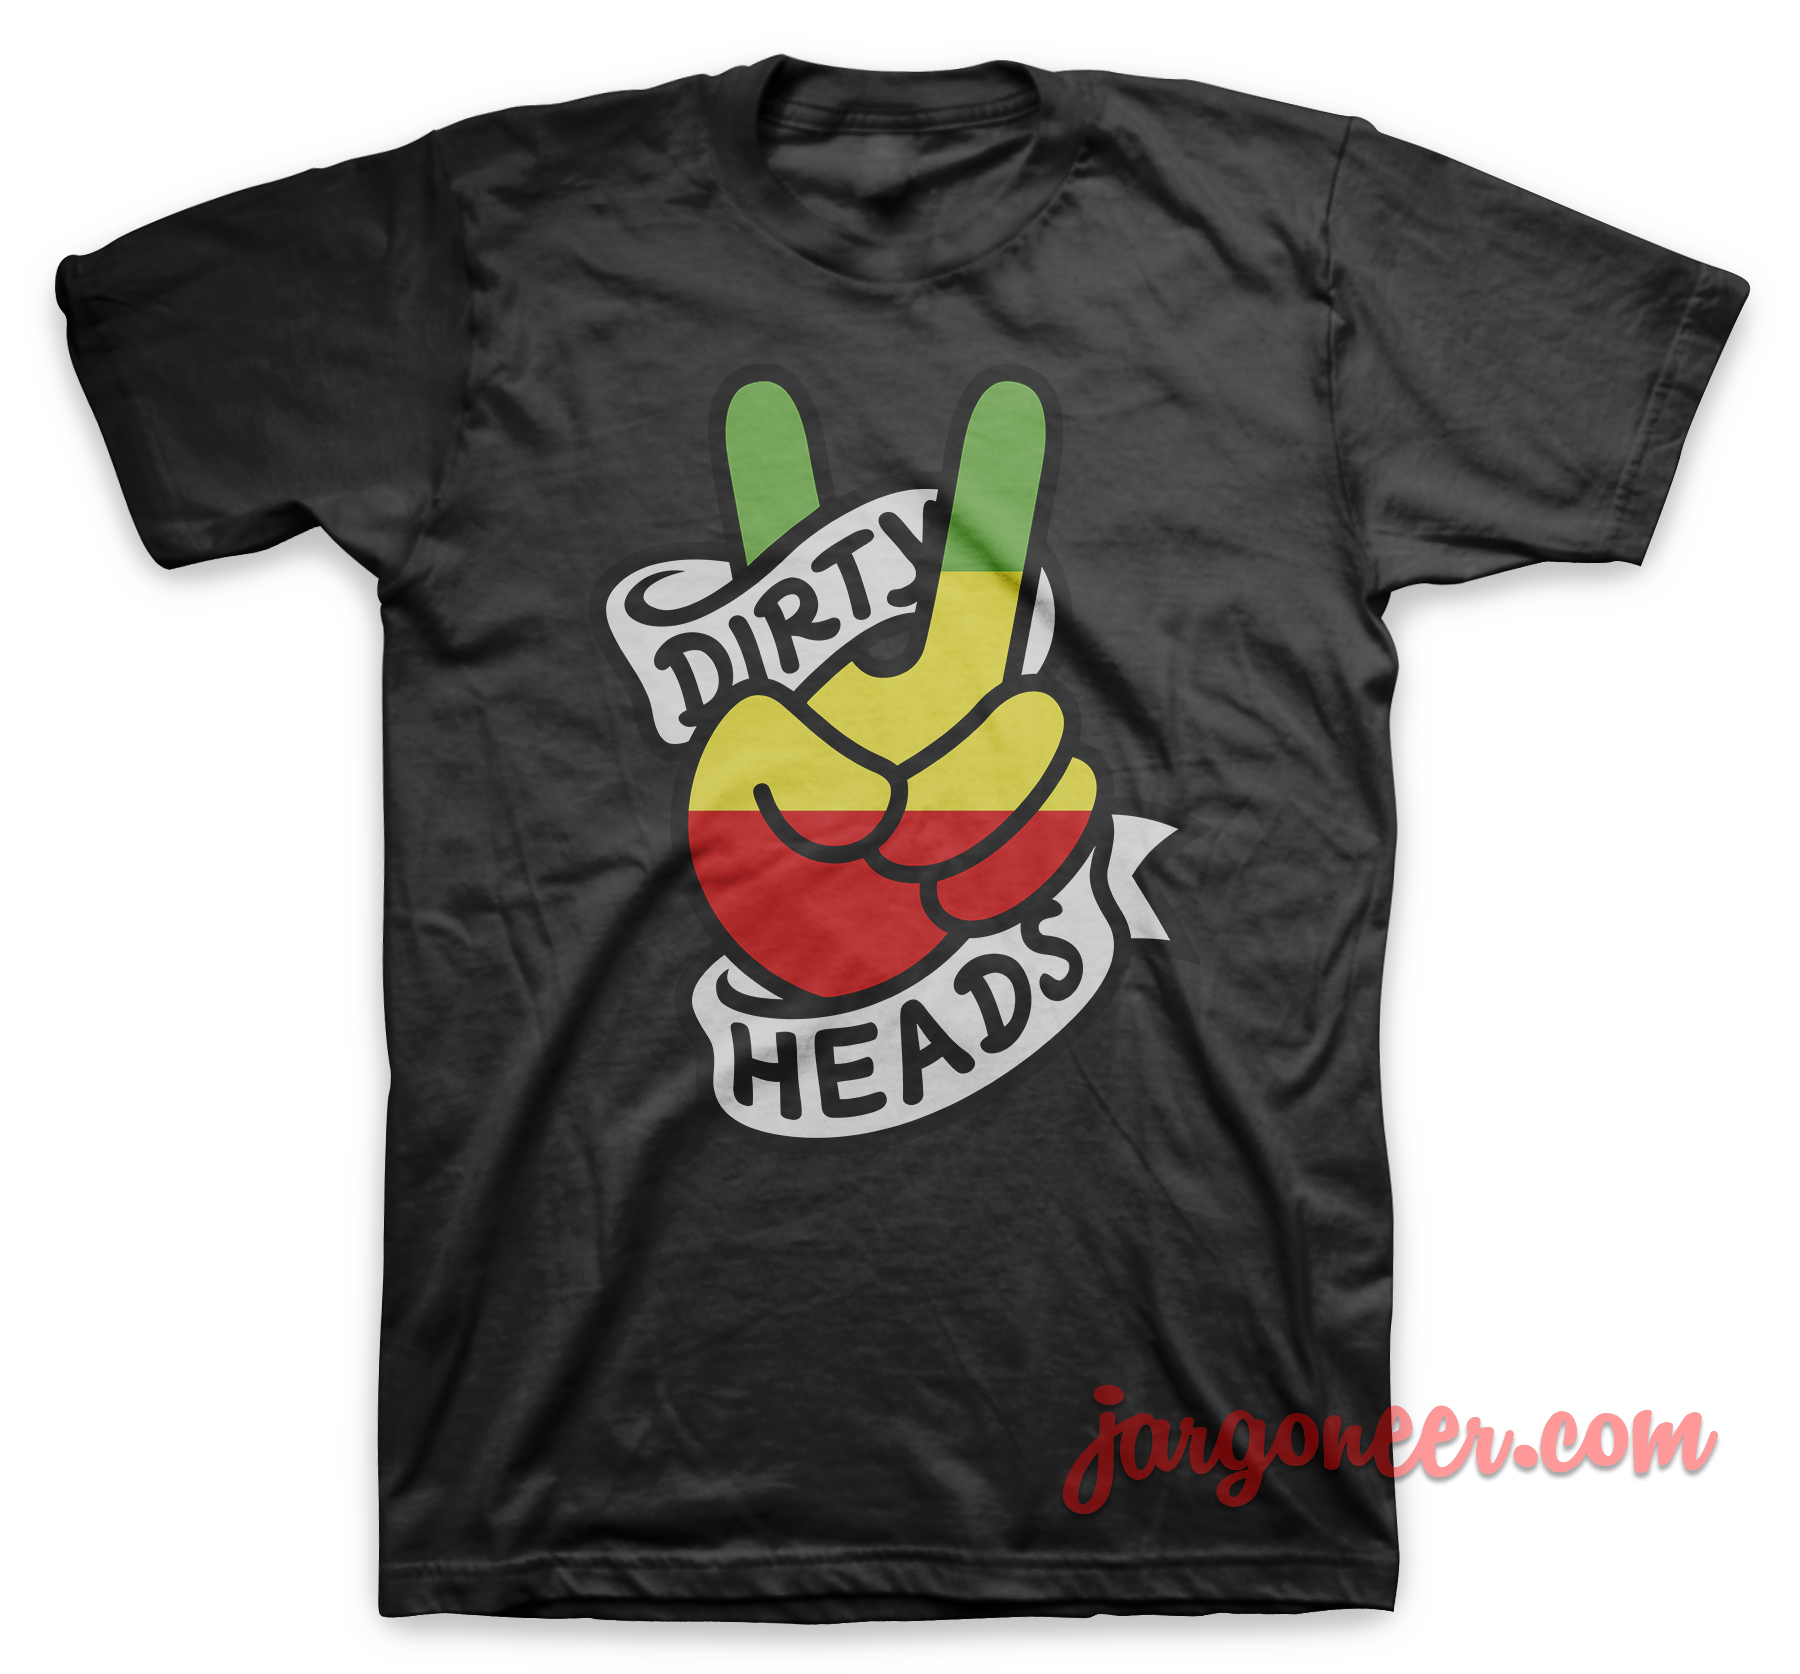 Dirty Heads Dirty Fingers Black T Shirt - Shop Unique Graphic Cool Shirt Designs